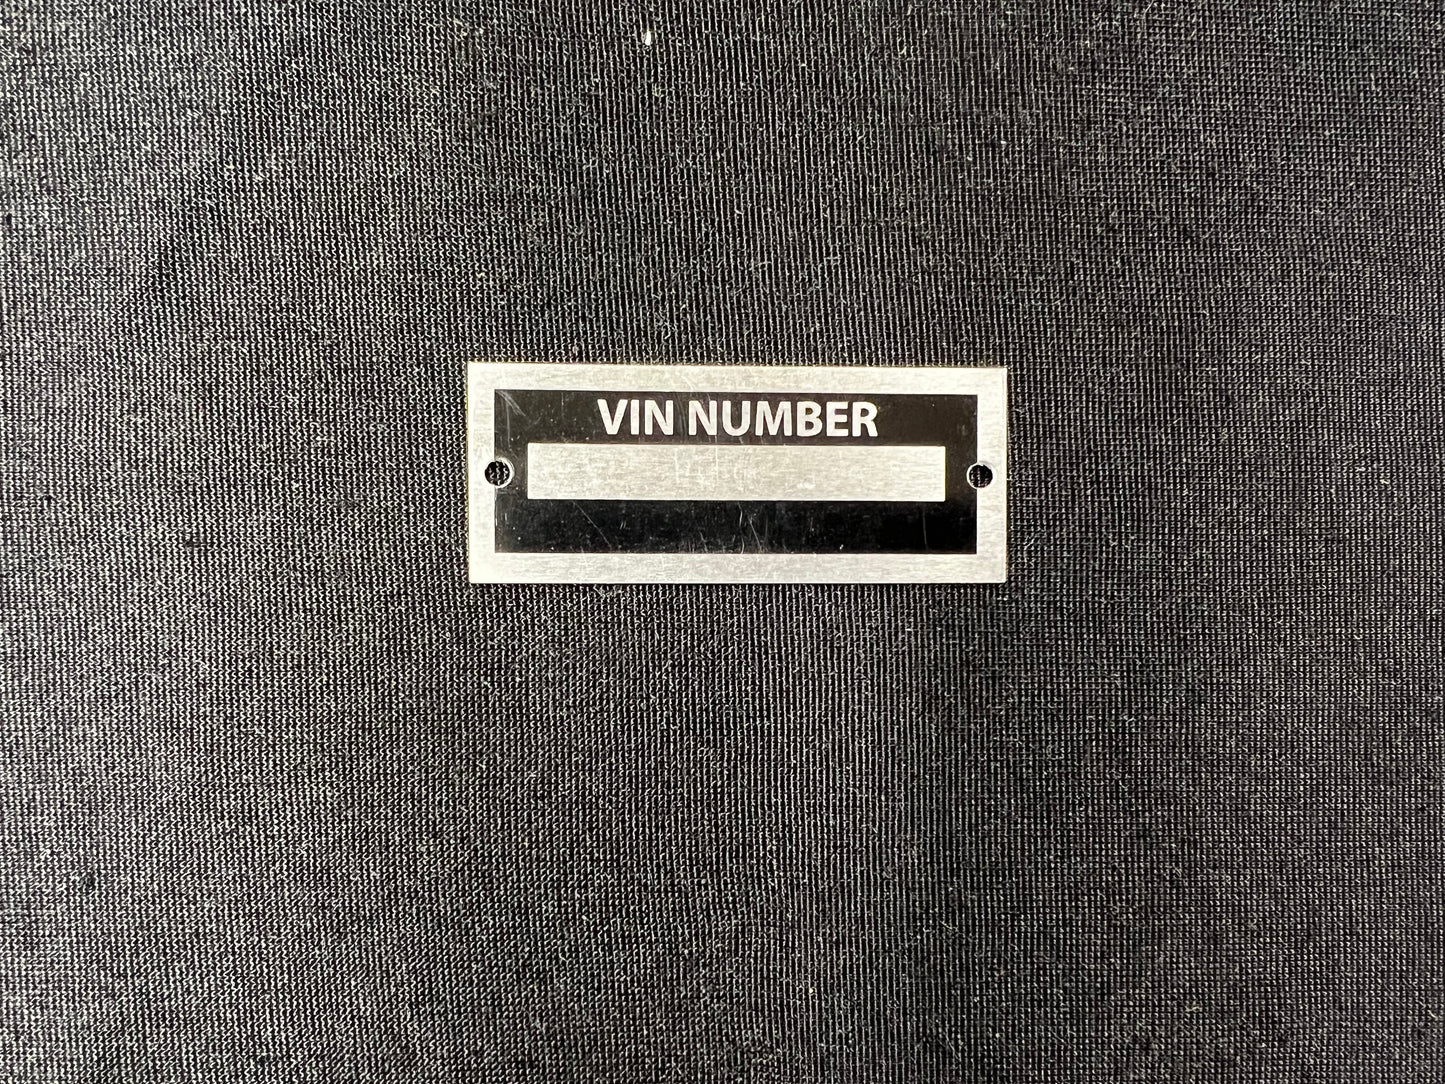 Blank VIN Number Plate